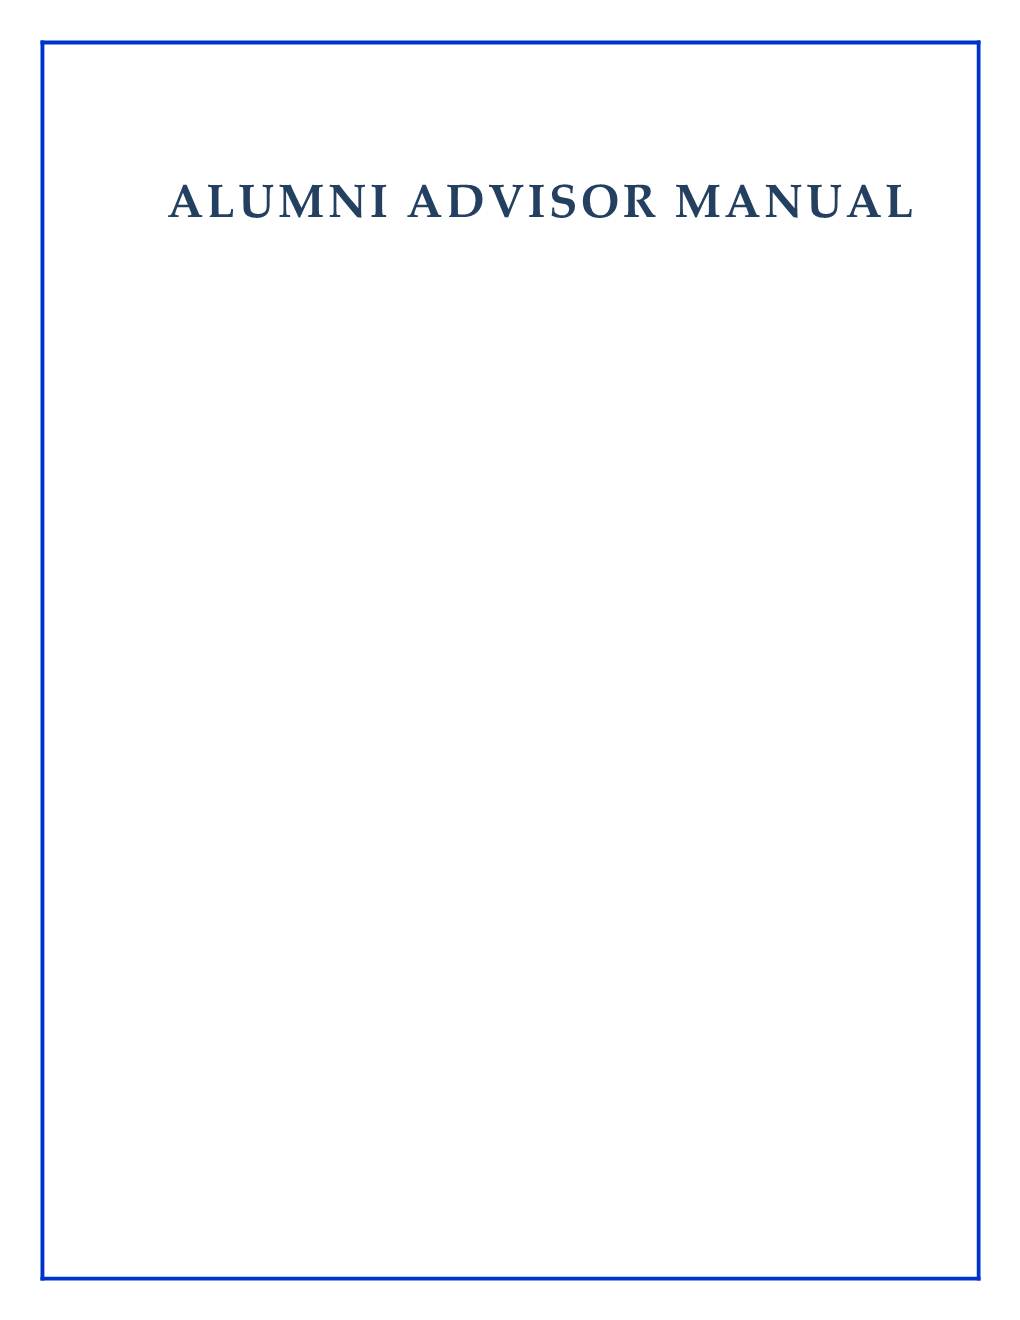 Alumni Advisor Manual